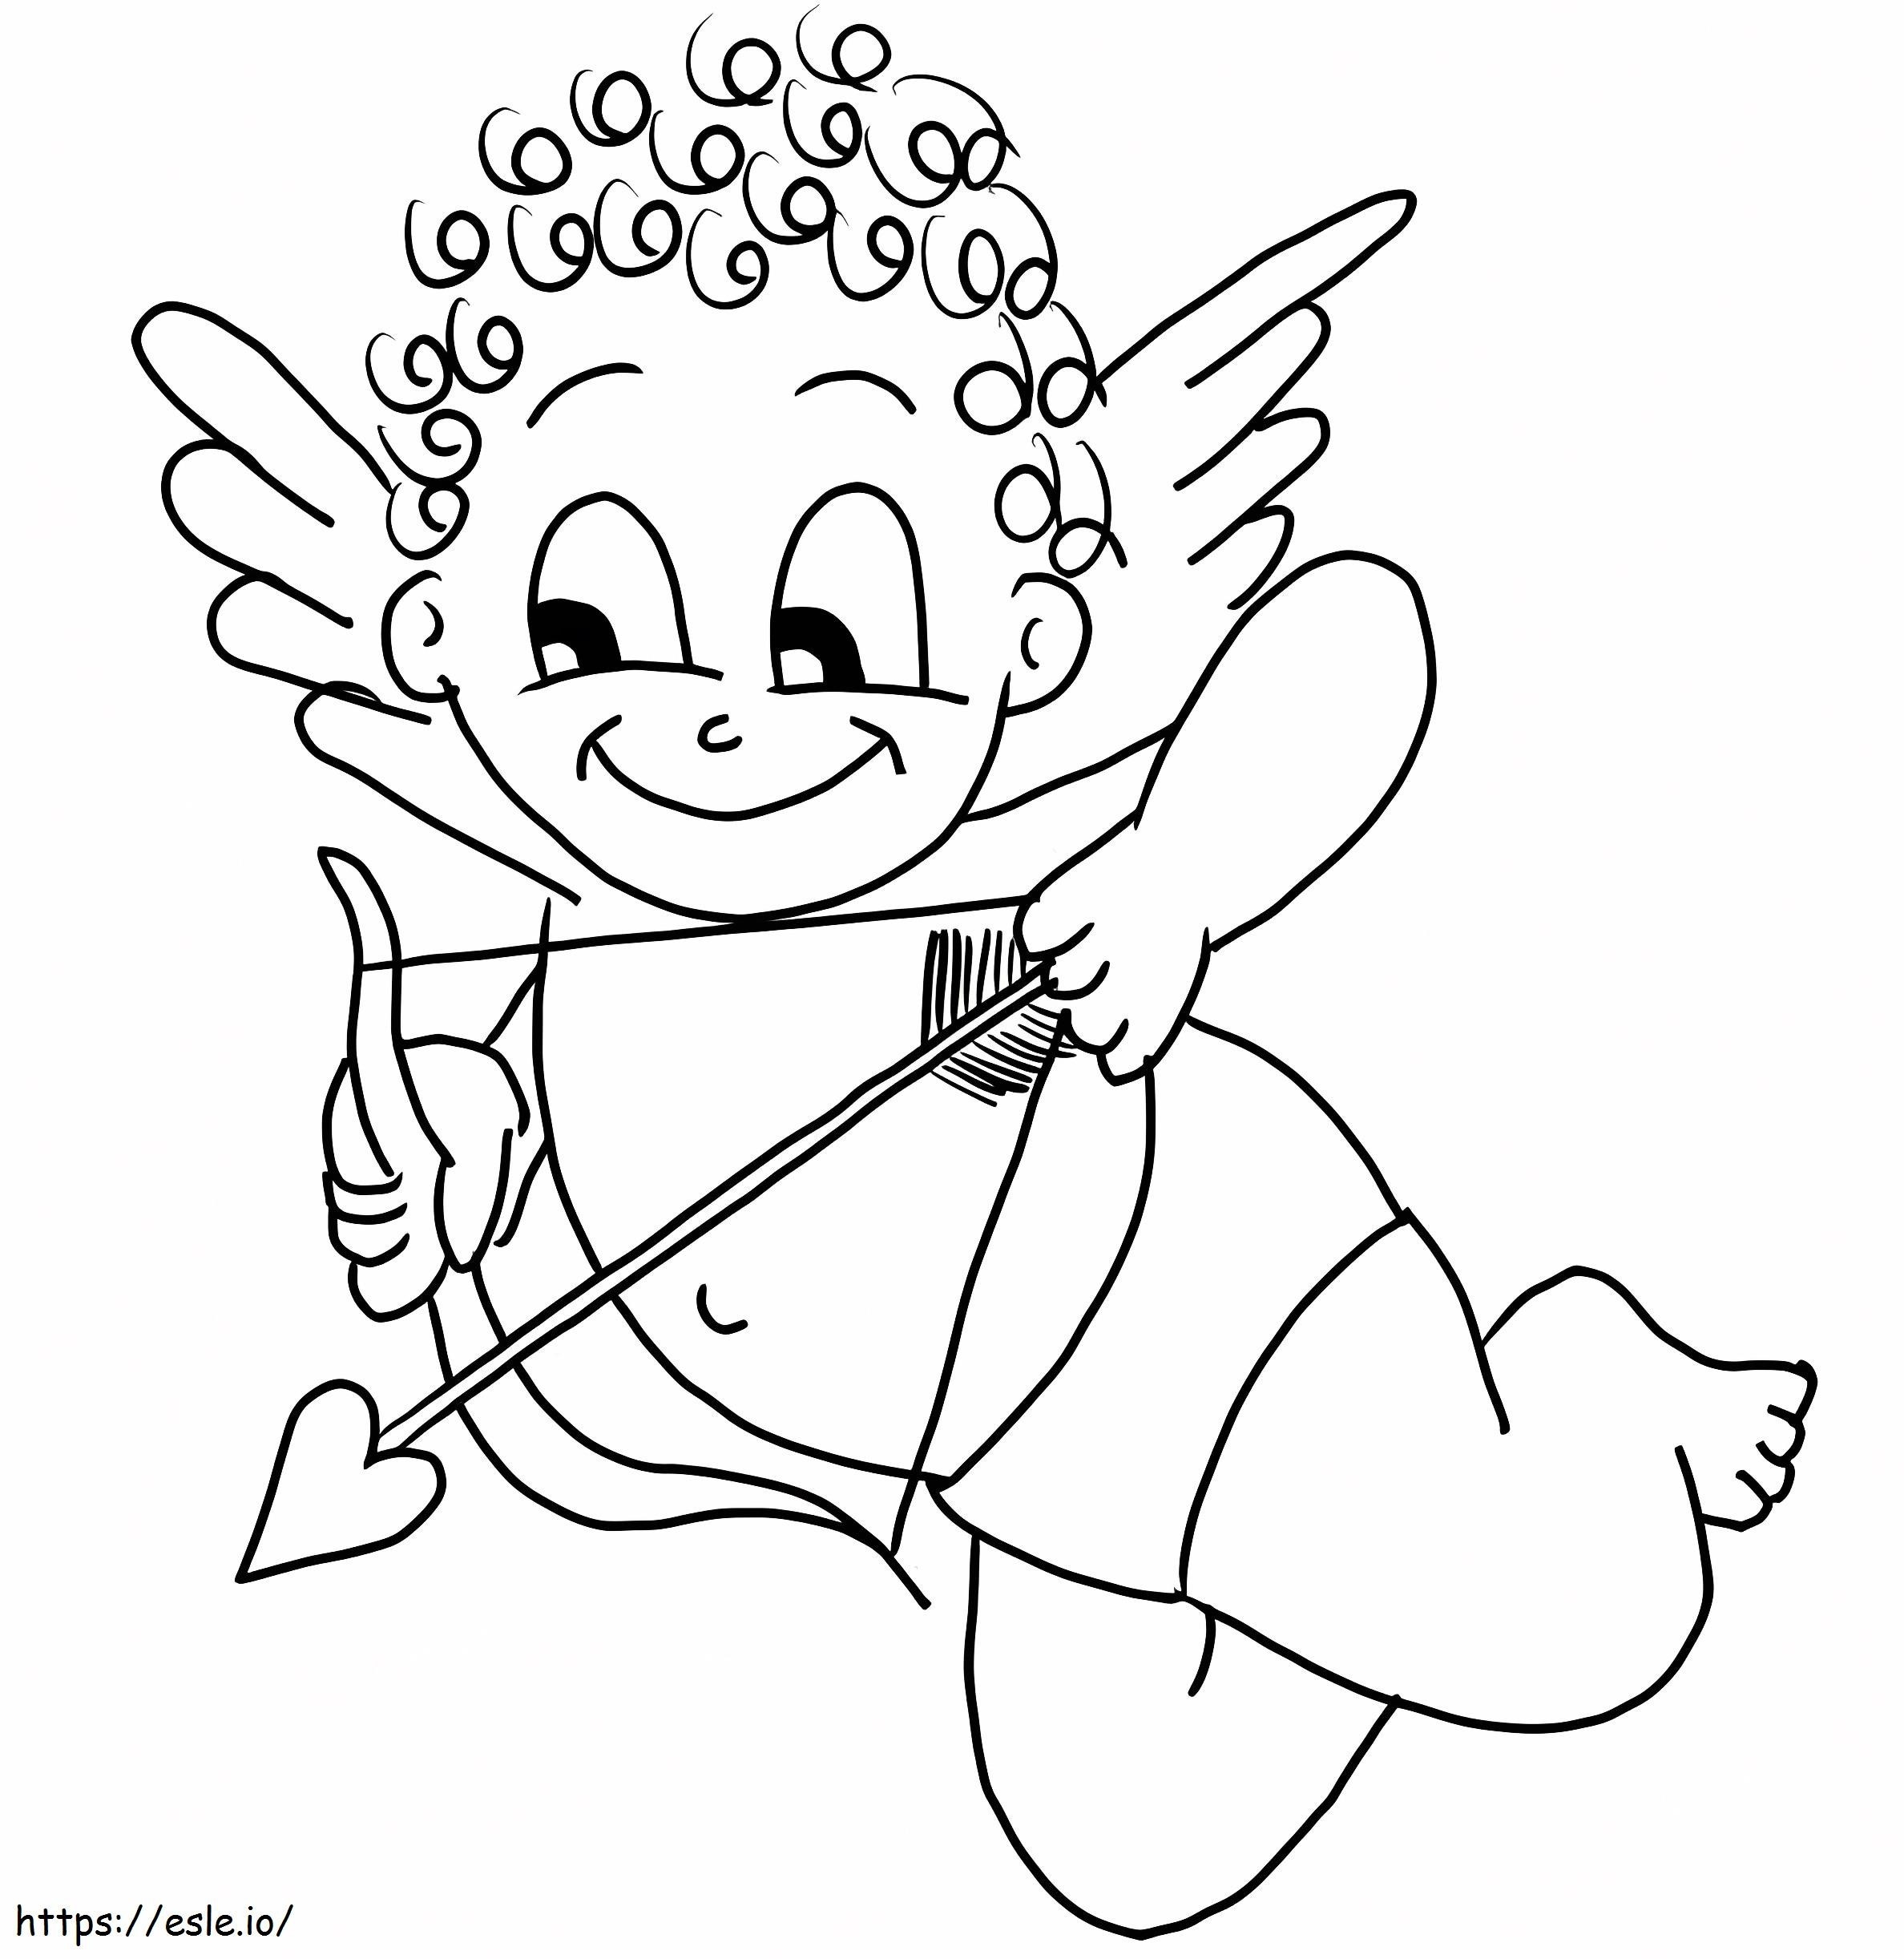 Coloriage Cupidon normal à imprimer dessin